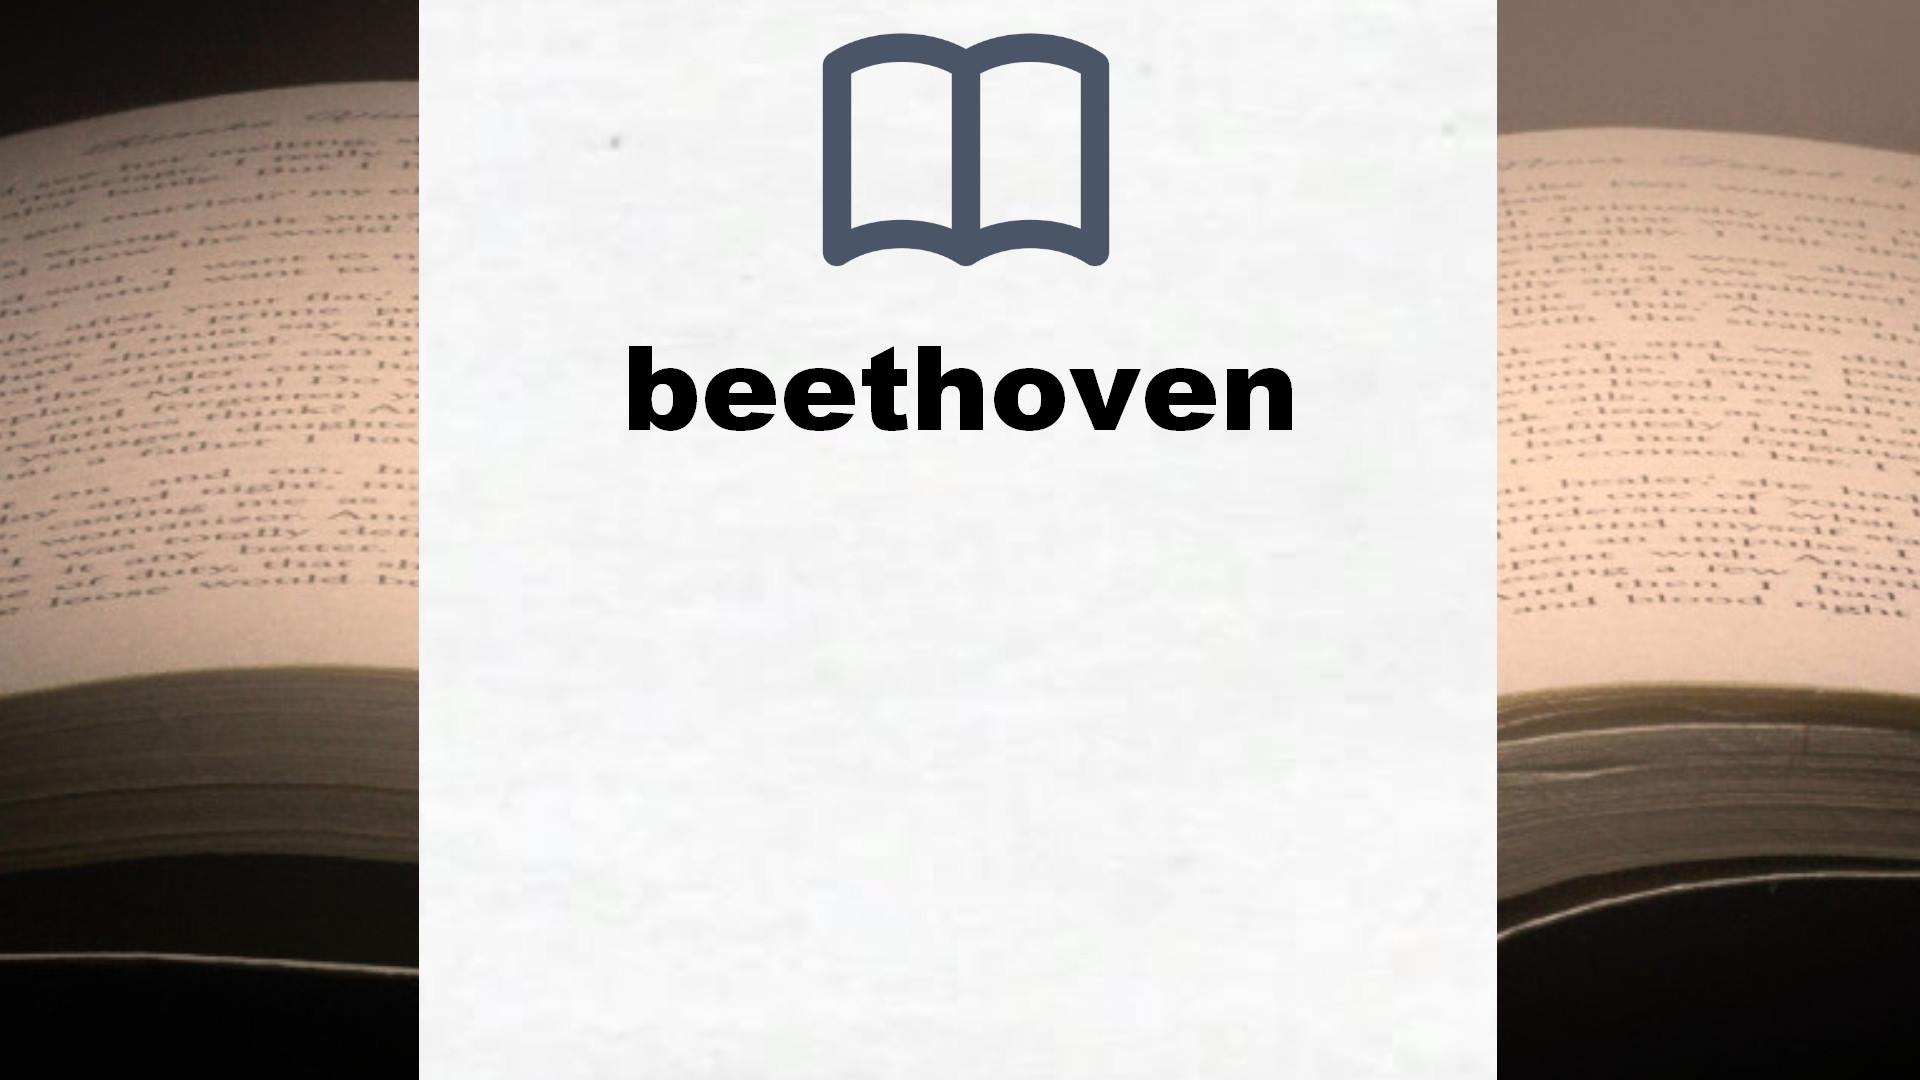 Libros sobre beethoven